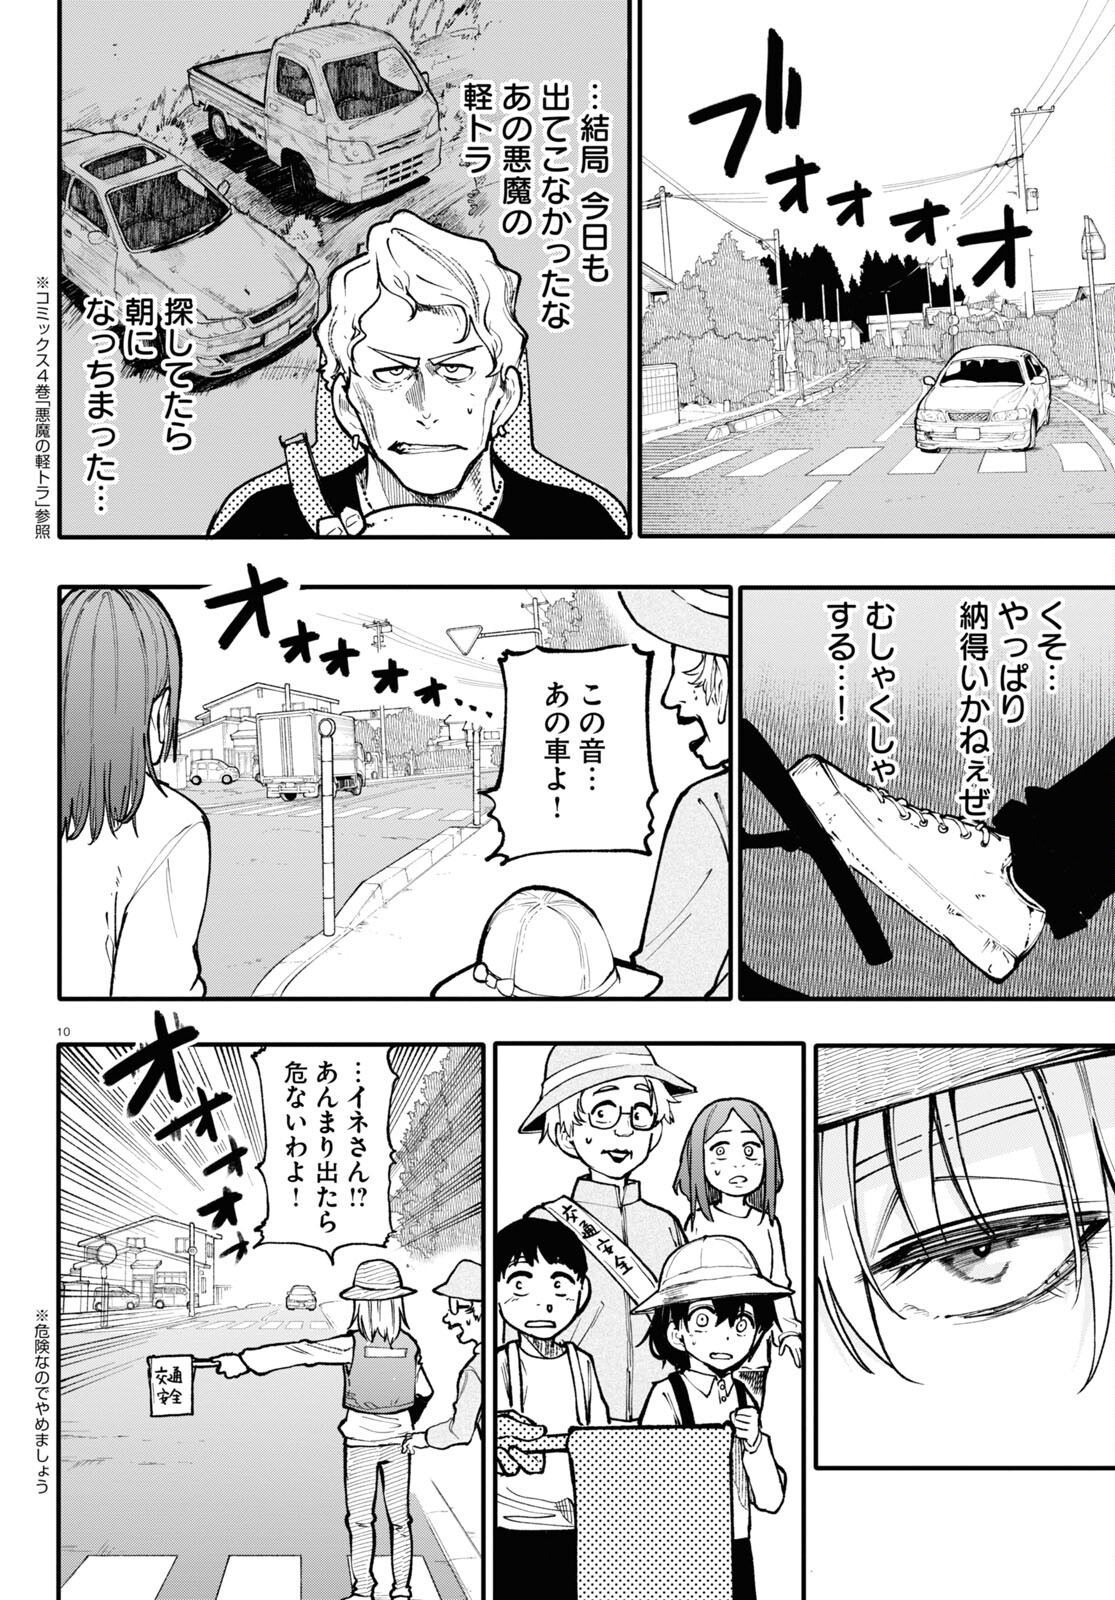 Ojii-san to Obaa-san ga Wakigaetta Hanashi - Chapter 127 - Page 1